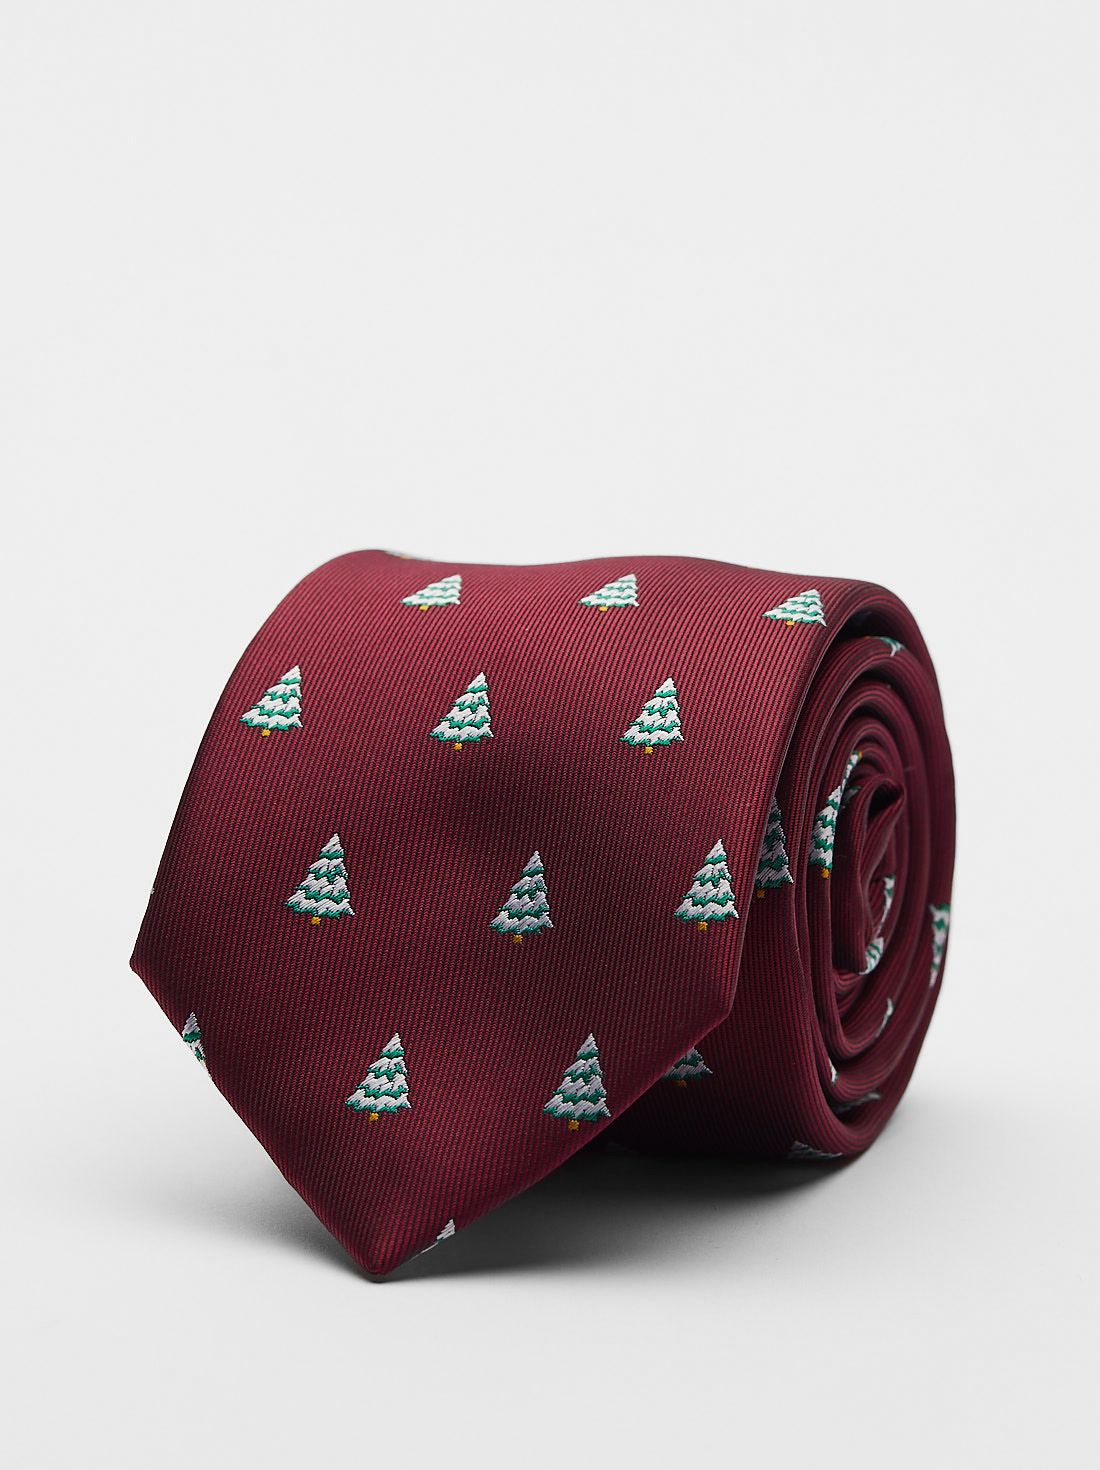 Burgundy Christmas Tie